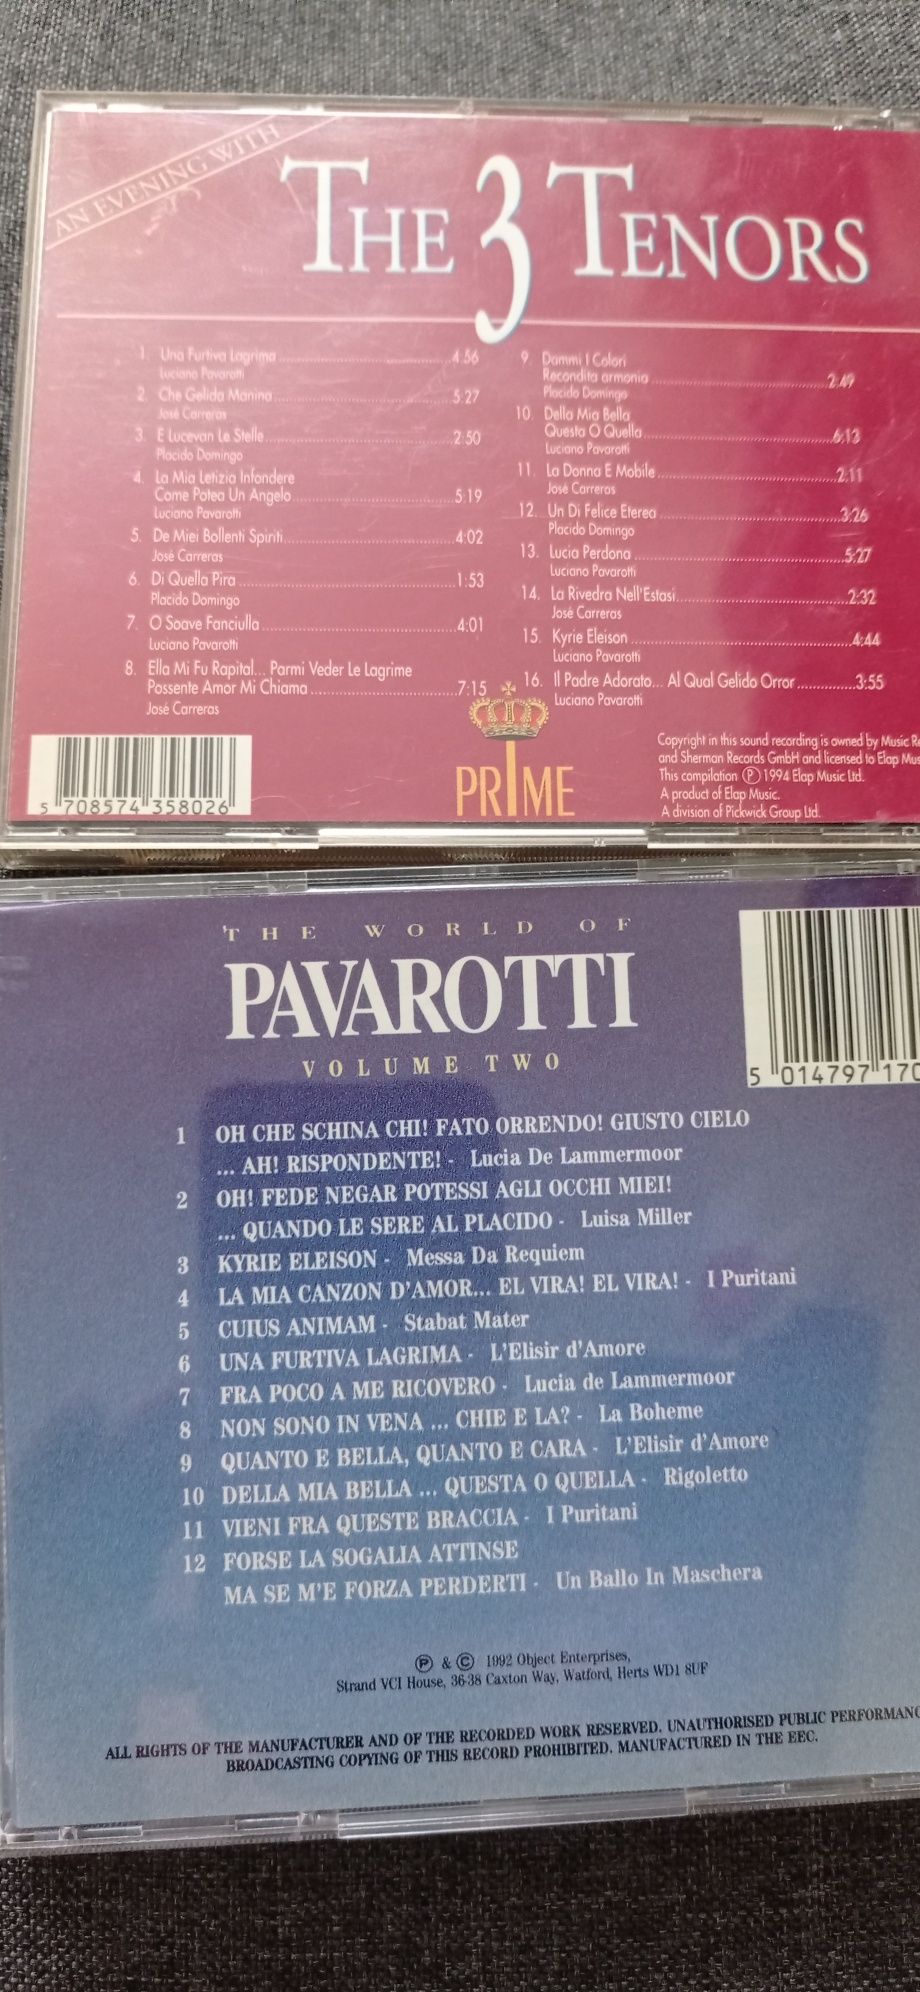 Pavarotti Carreras Domingo